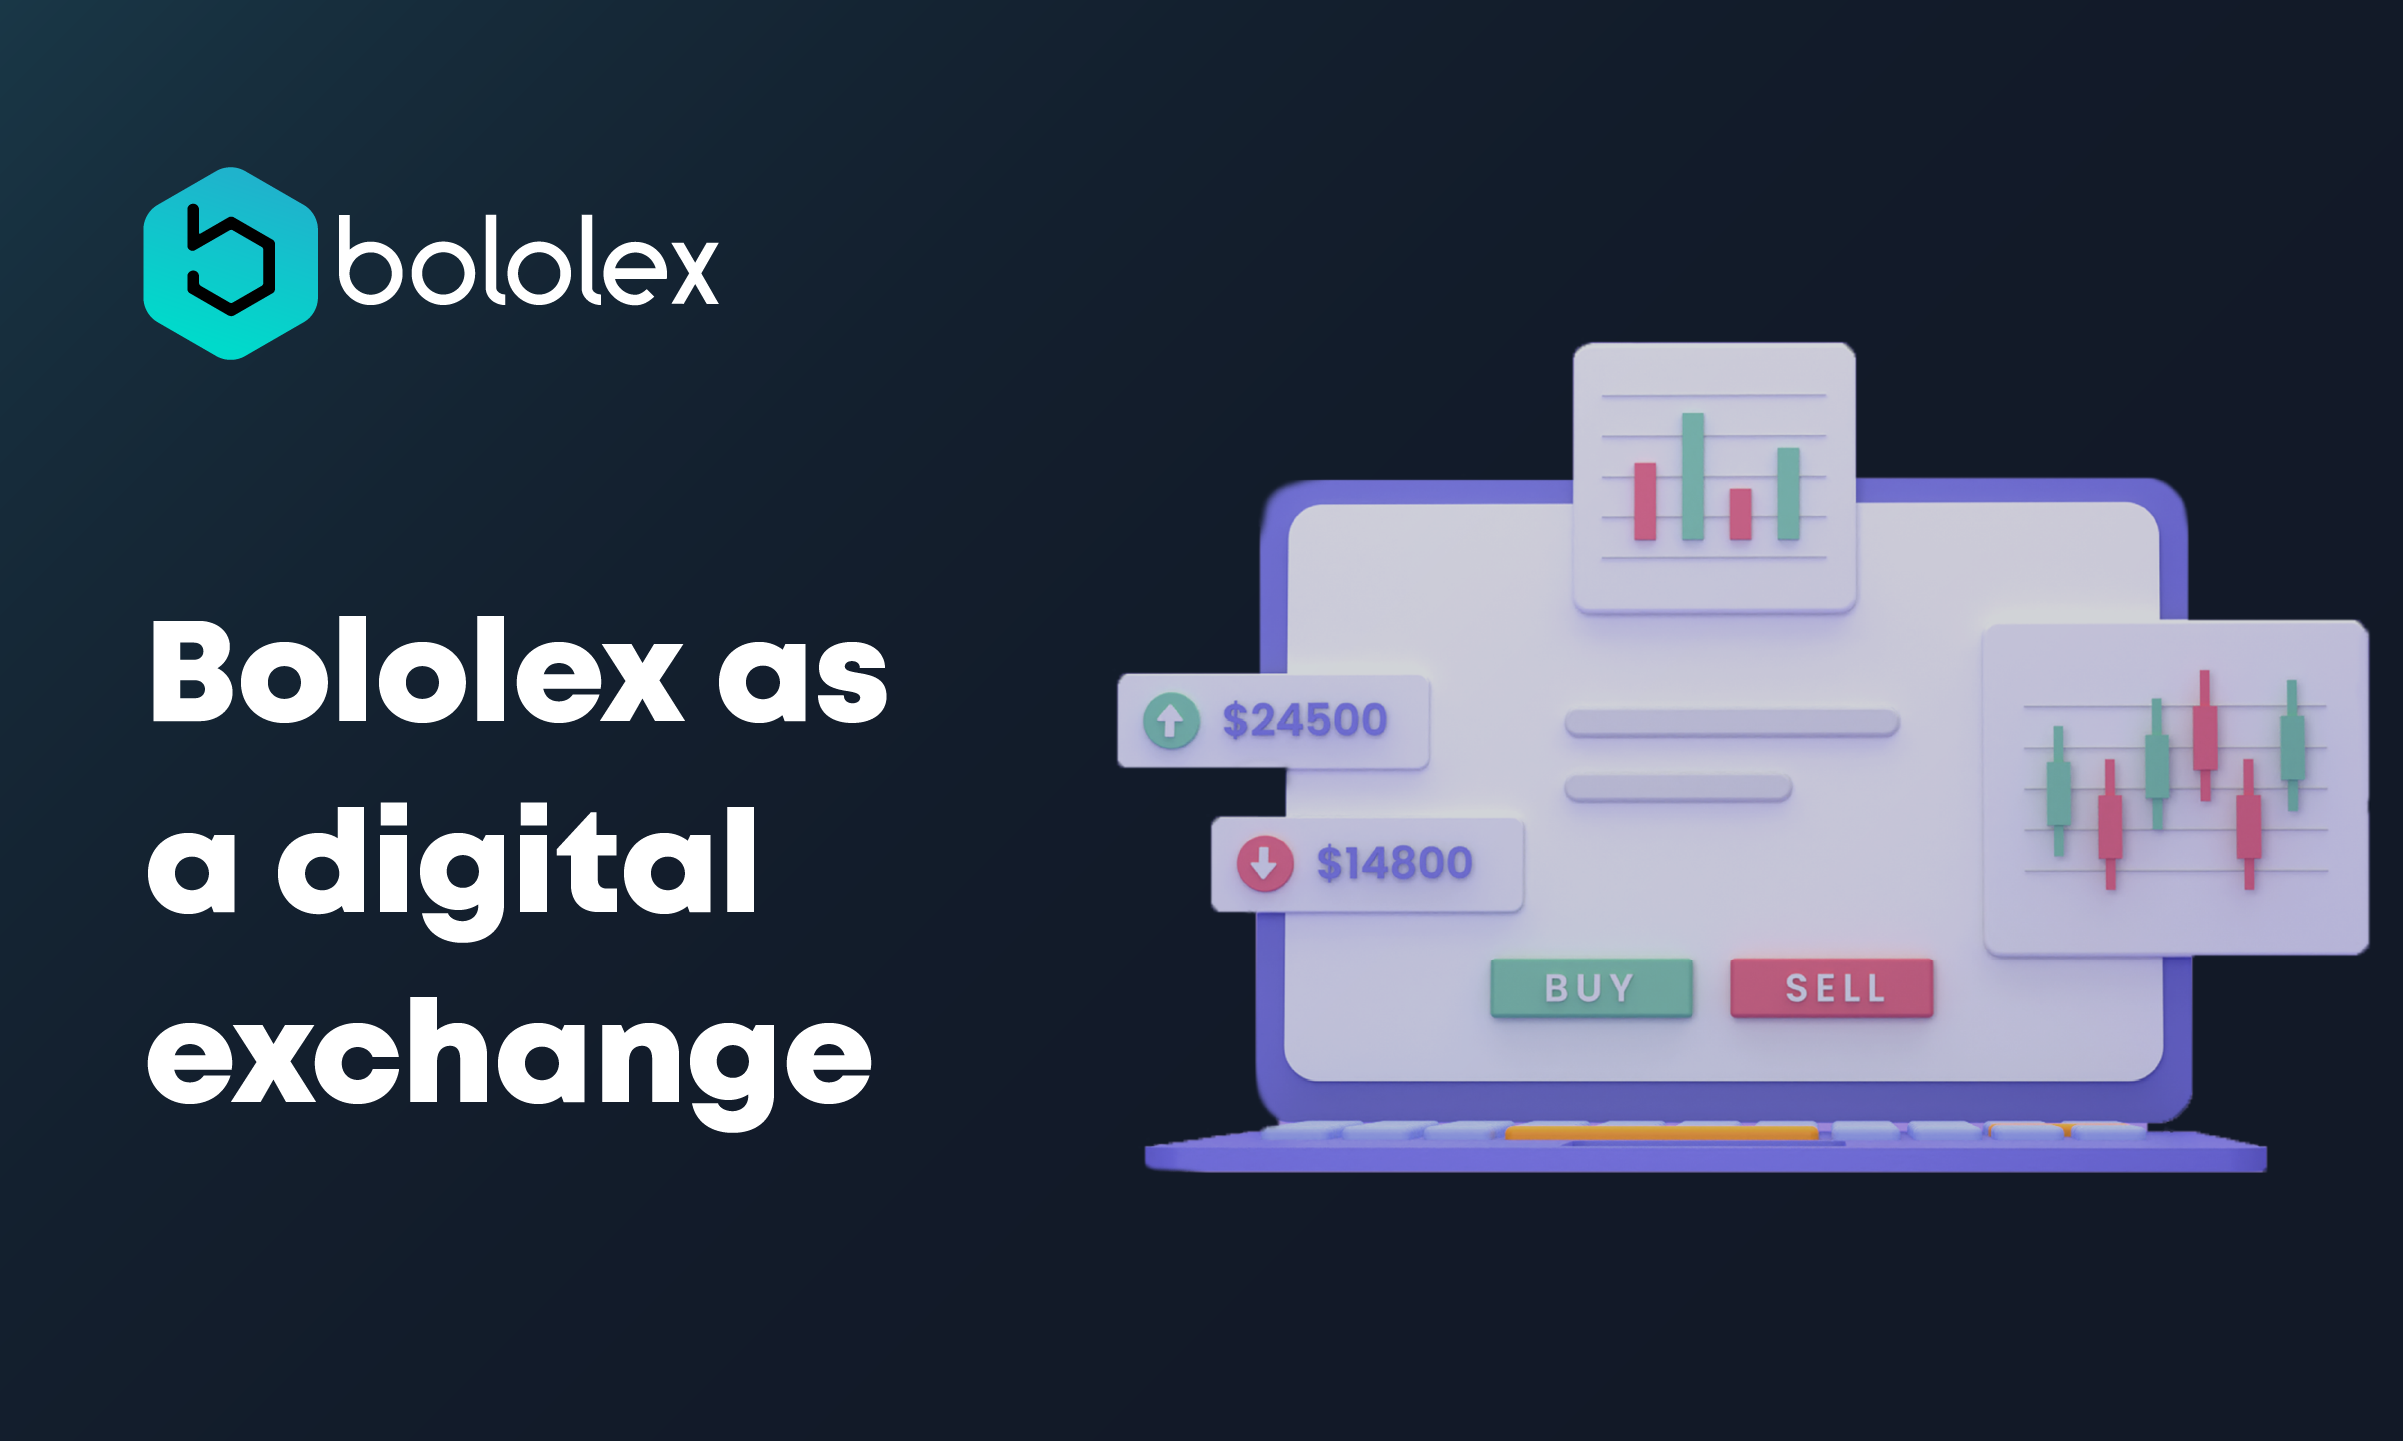 Bololex as a digital exchange